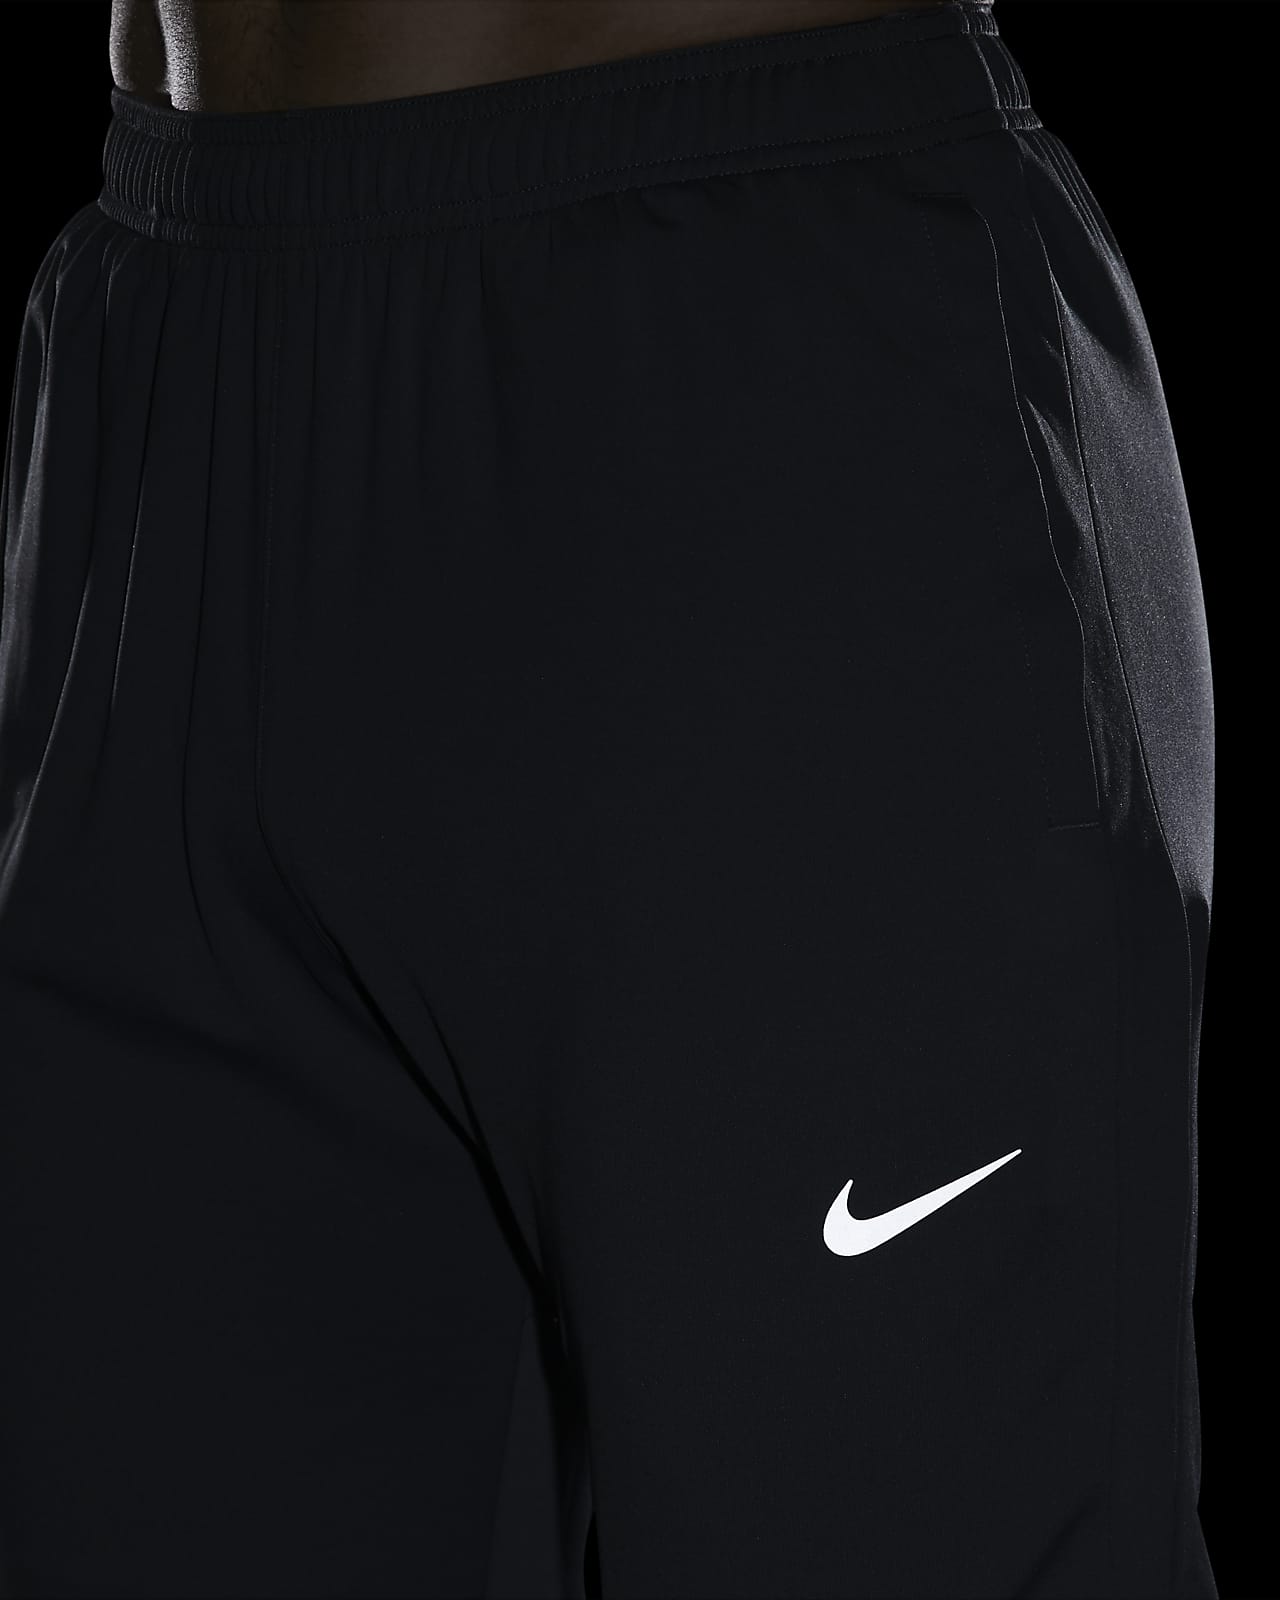 Running Trousers. Nike CA